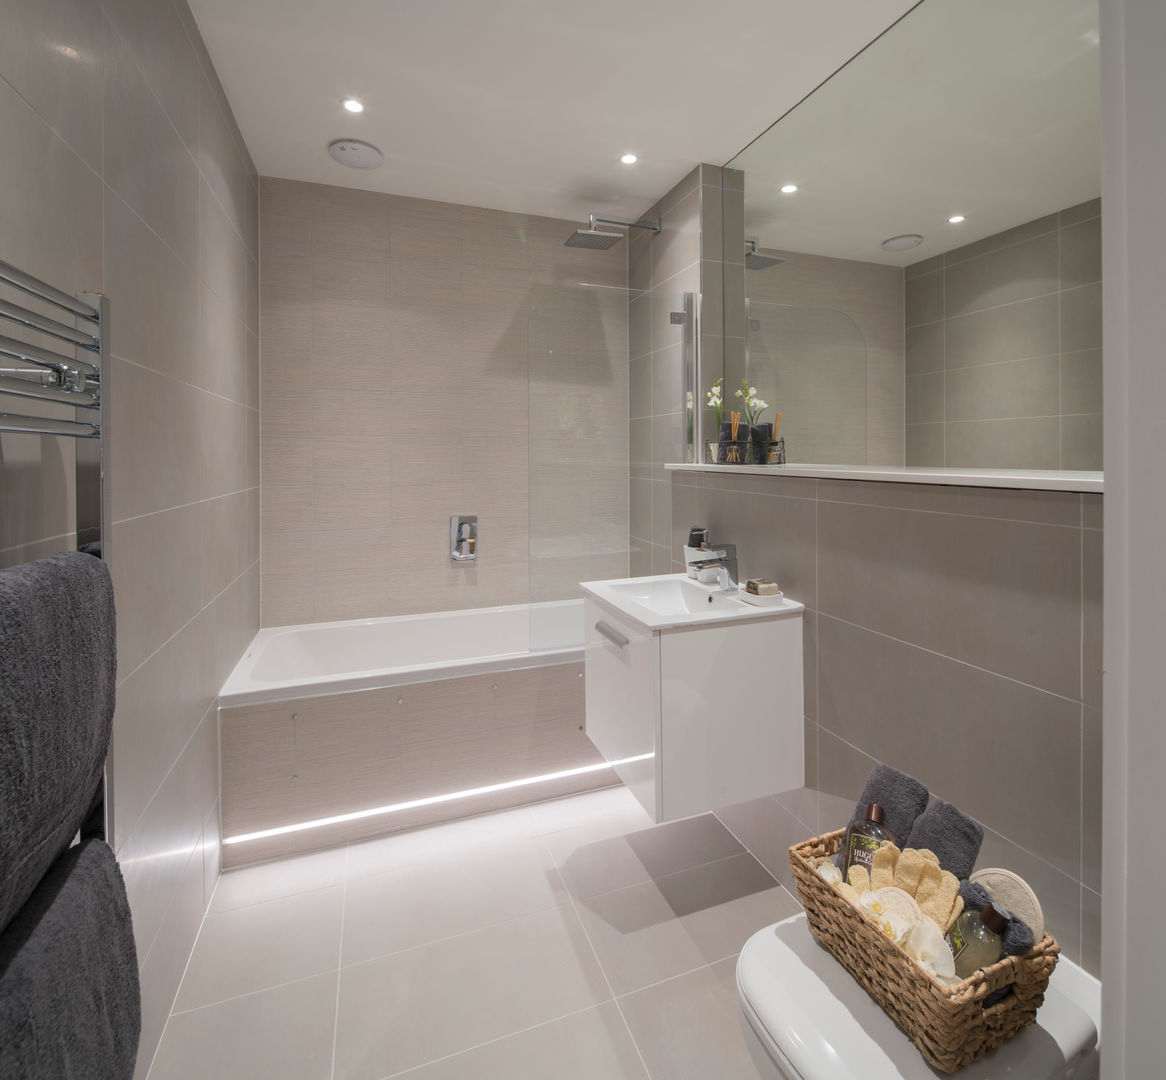 Station Rd, New Barnet Jigsaw Interior Architecture & Design Modern Bathroom luxury,bathroom,tiles,mirror,bronze,london,show home